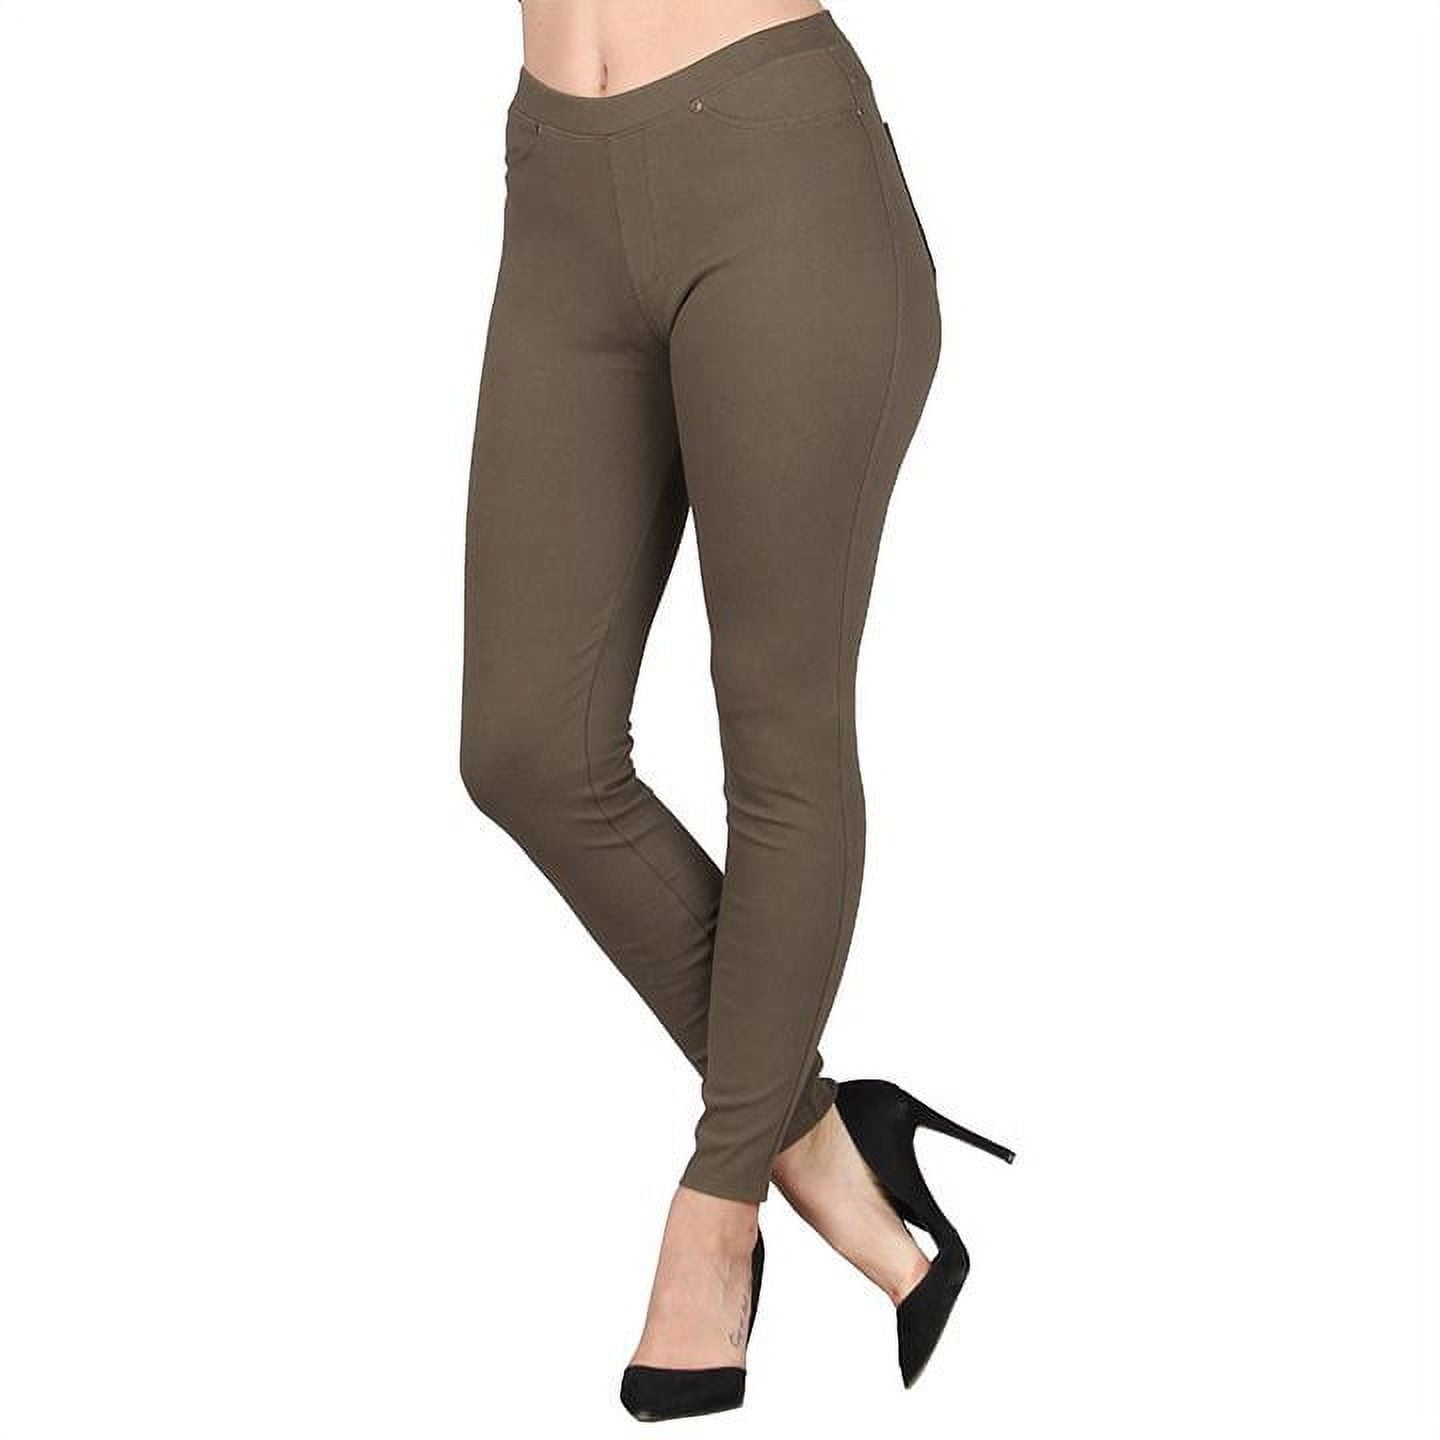 US Ladies Stretchable Skinny Women Cotton Long Legging - Size M-XL 1143600